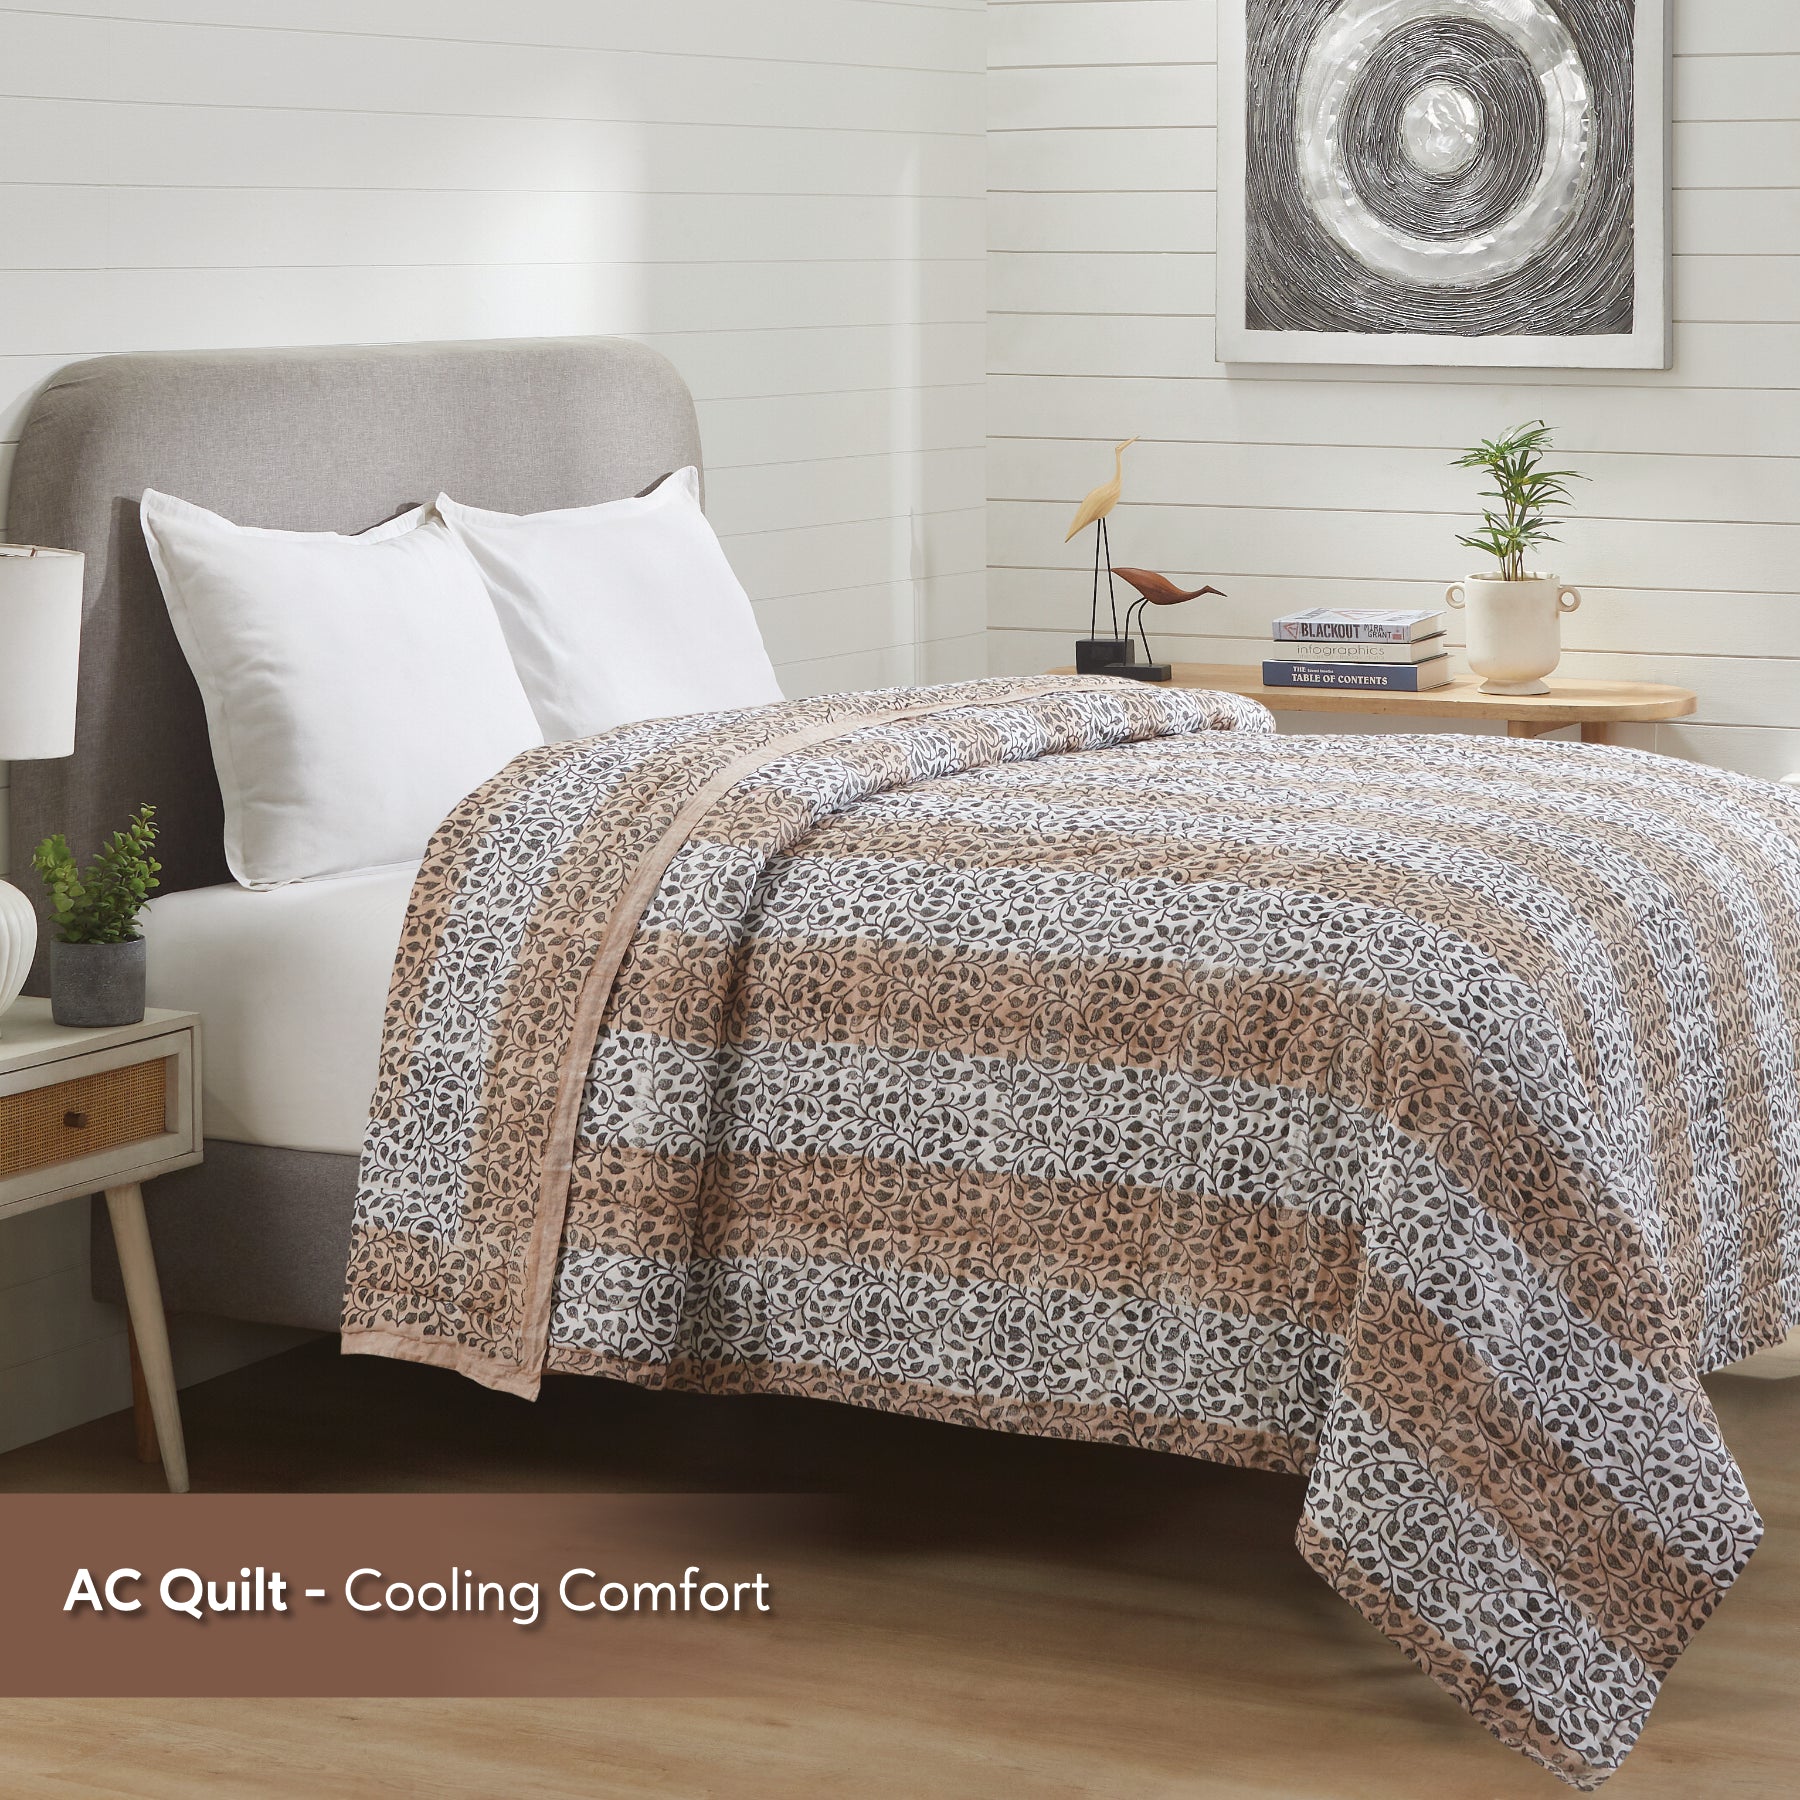 AC Quilt - Cooling Comfort